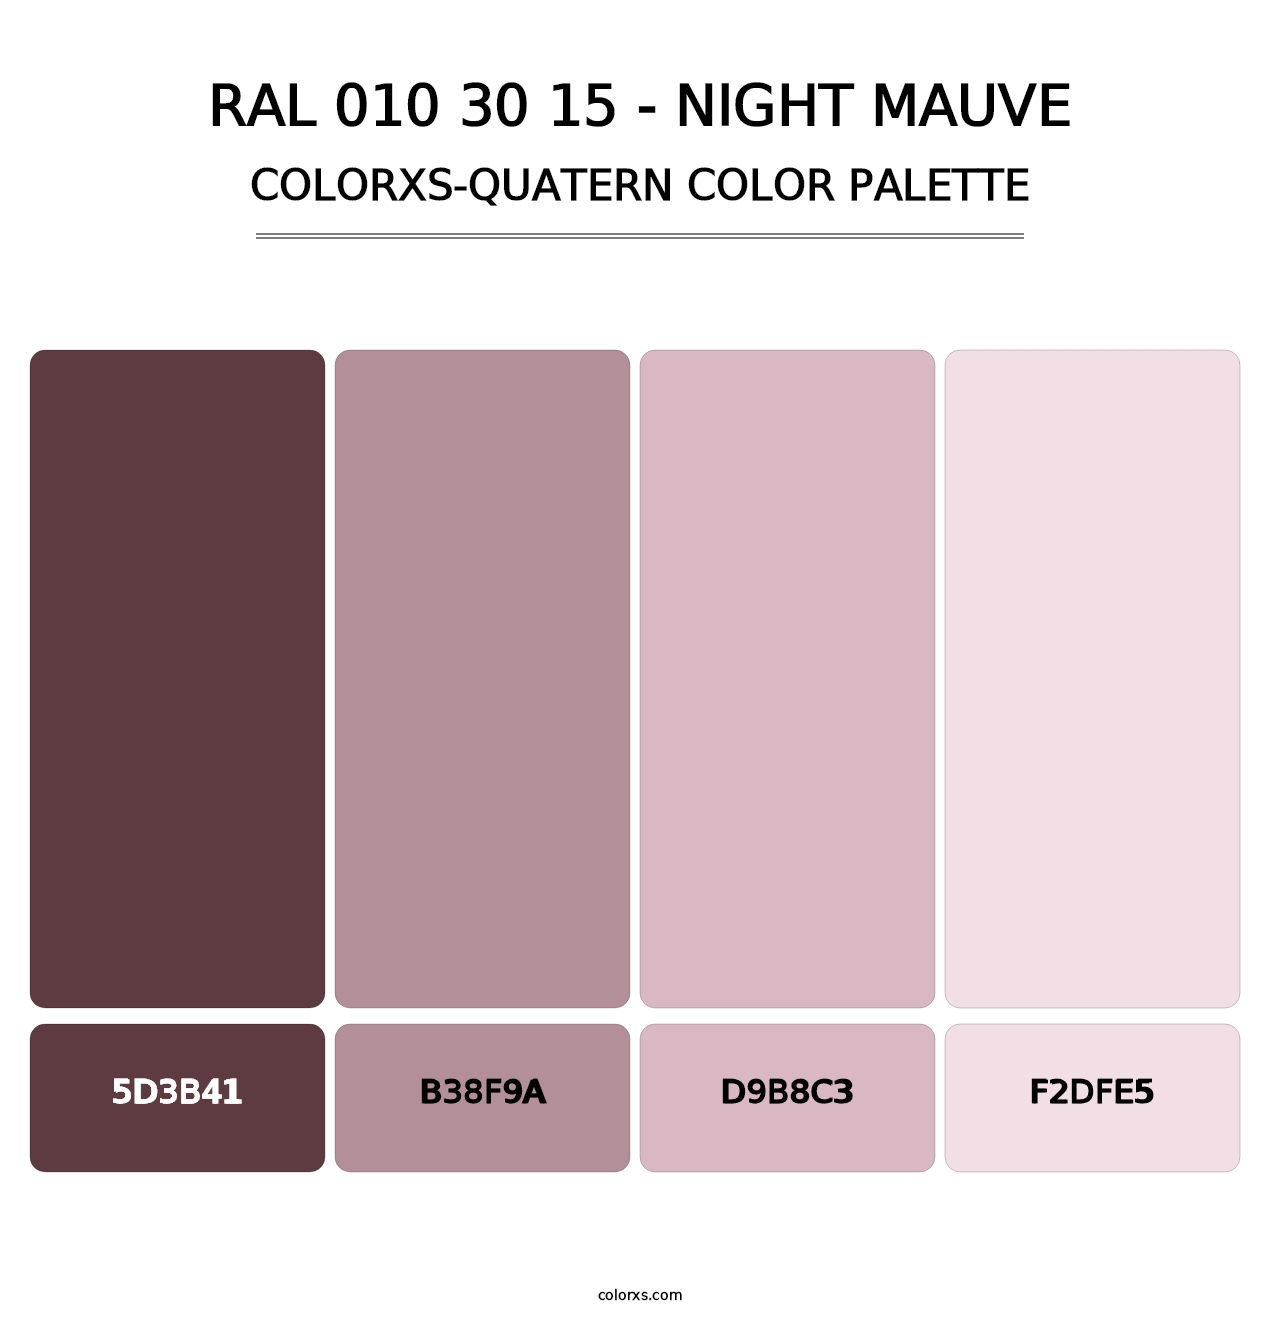 RAL 010 30 15 - Night Mauve - Colorxs Quatern Palette